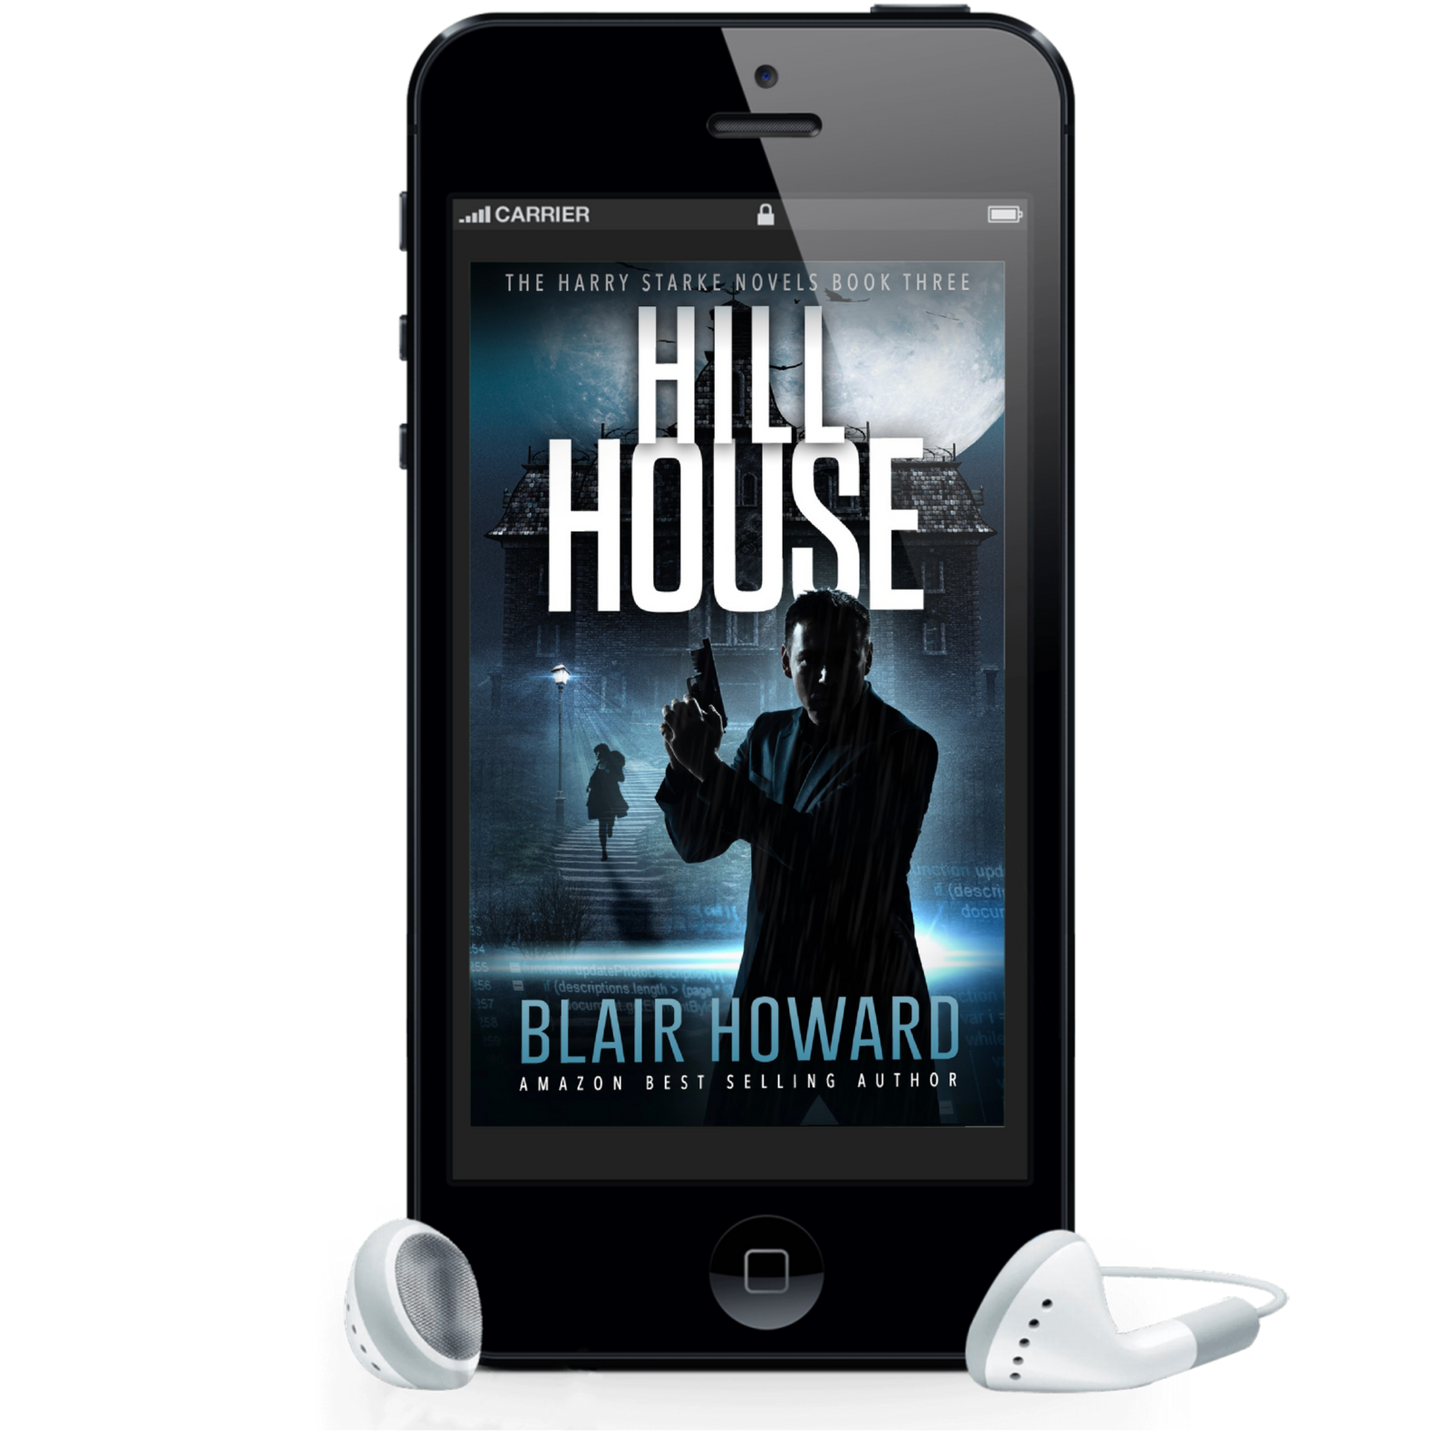 Hill House Audiobook (The Harry Starke Novels Book 3)